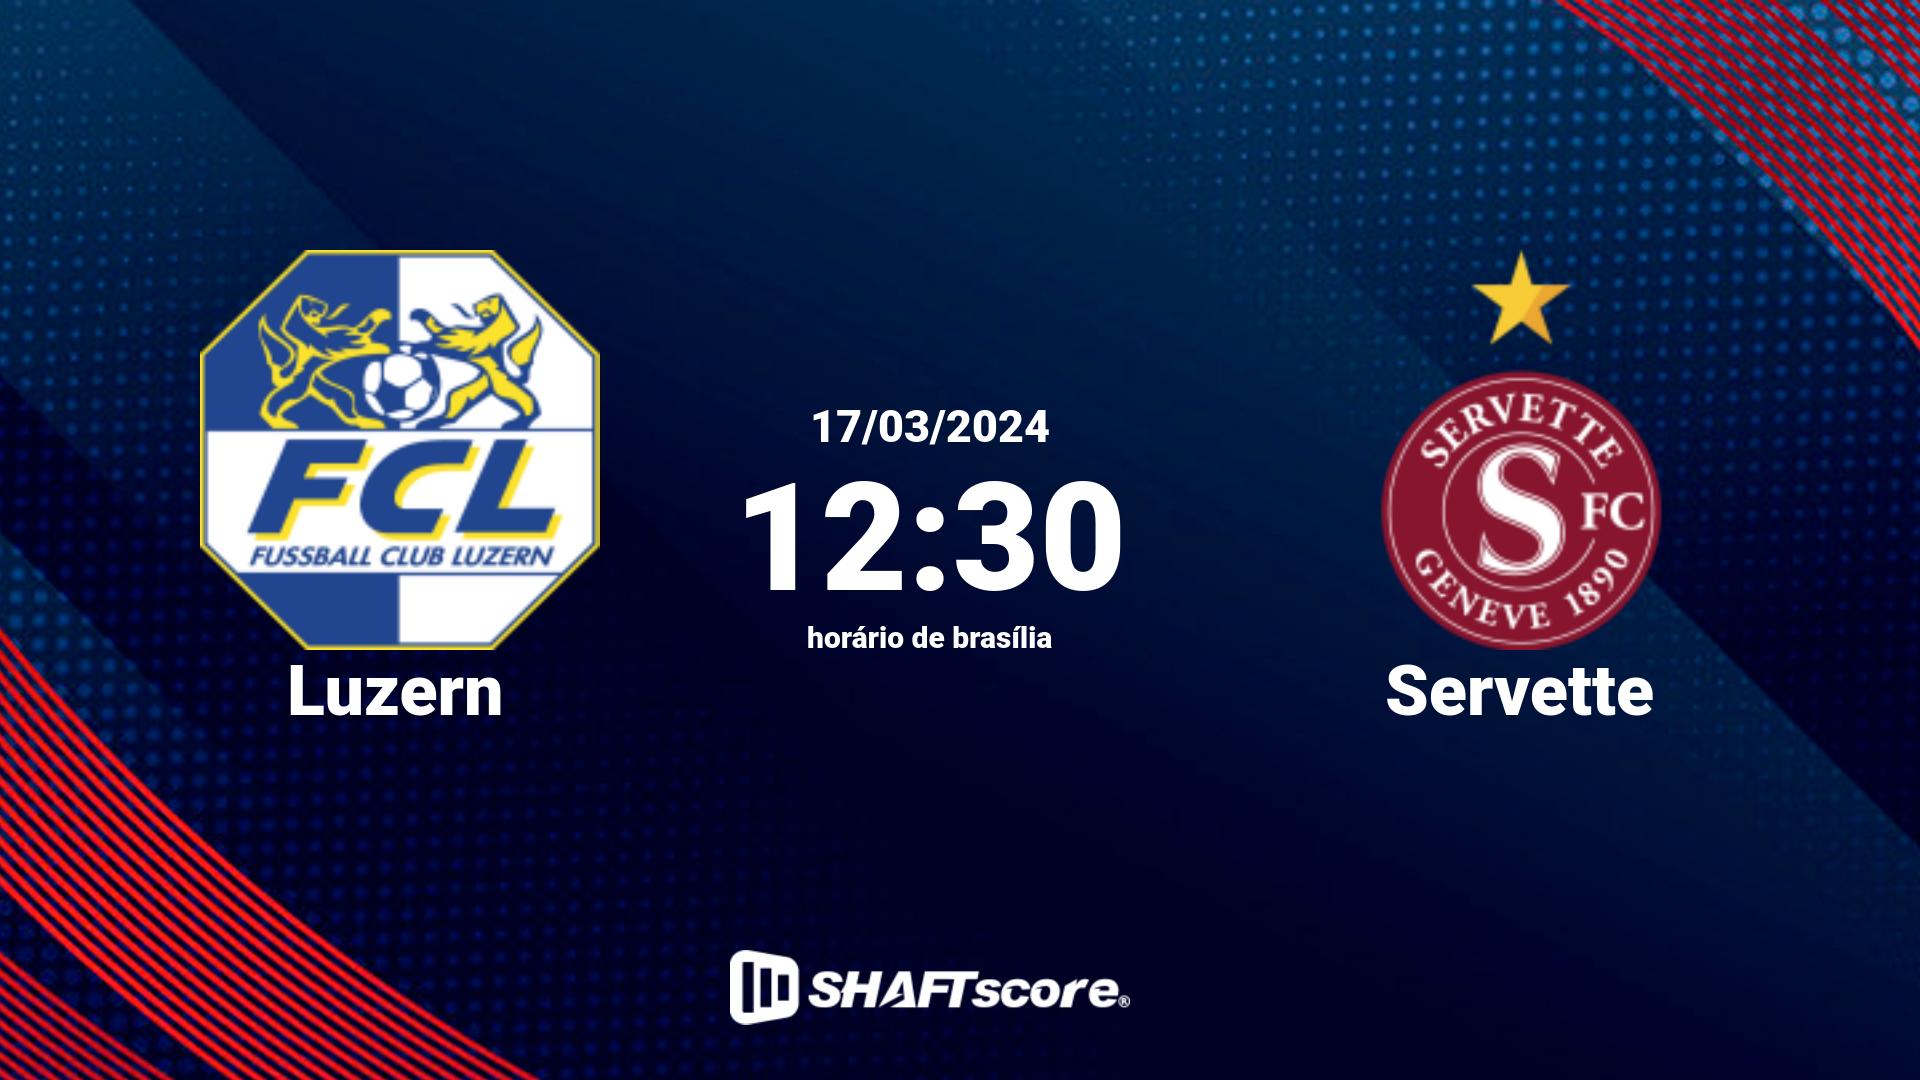 Estatísticas do jogo Luzern vs Servette 17.03 12:30